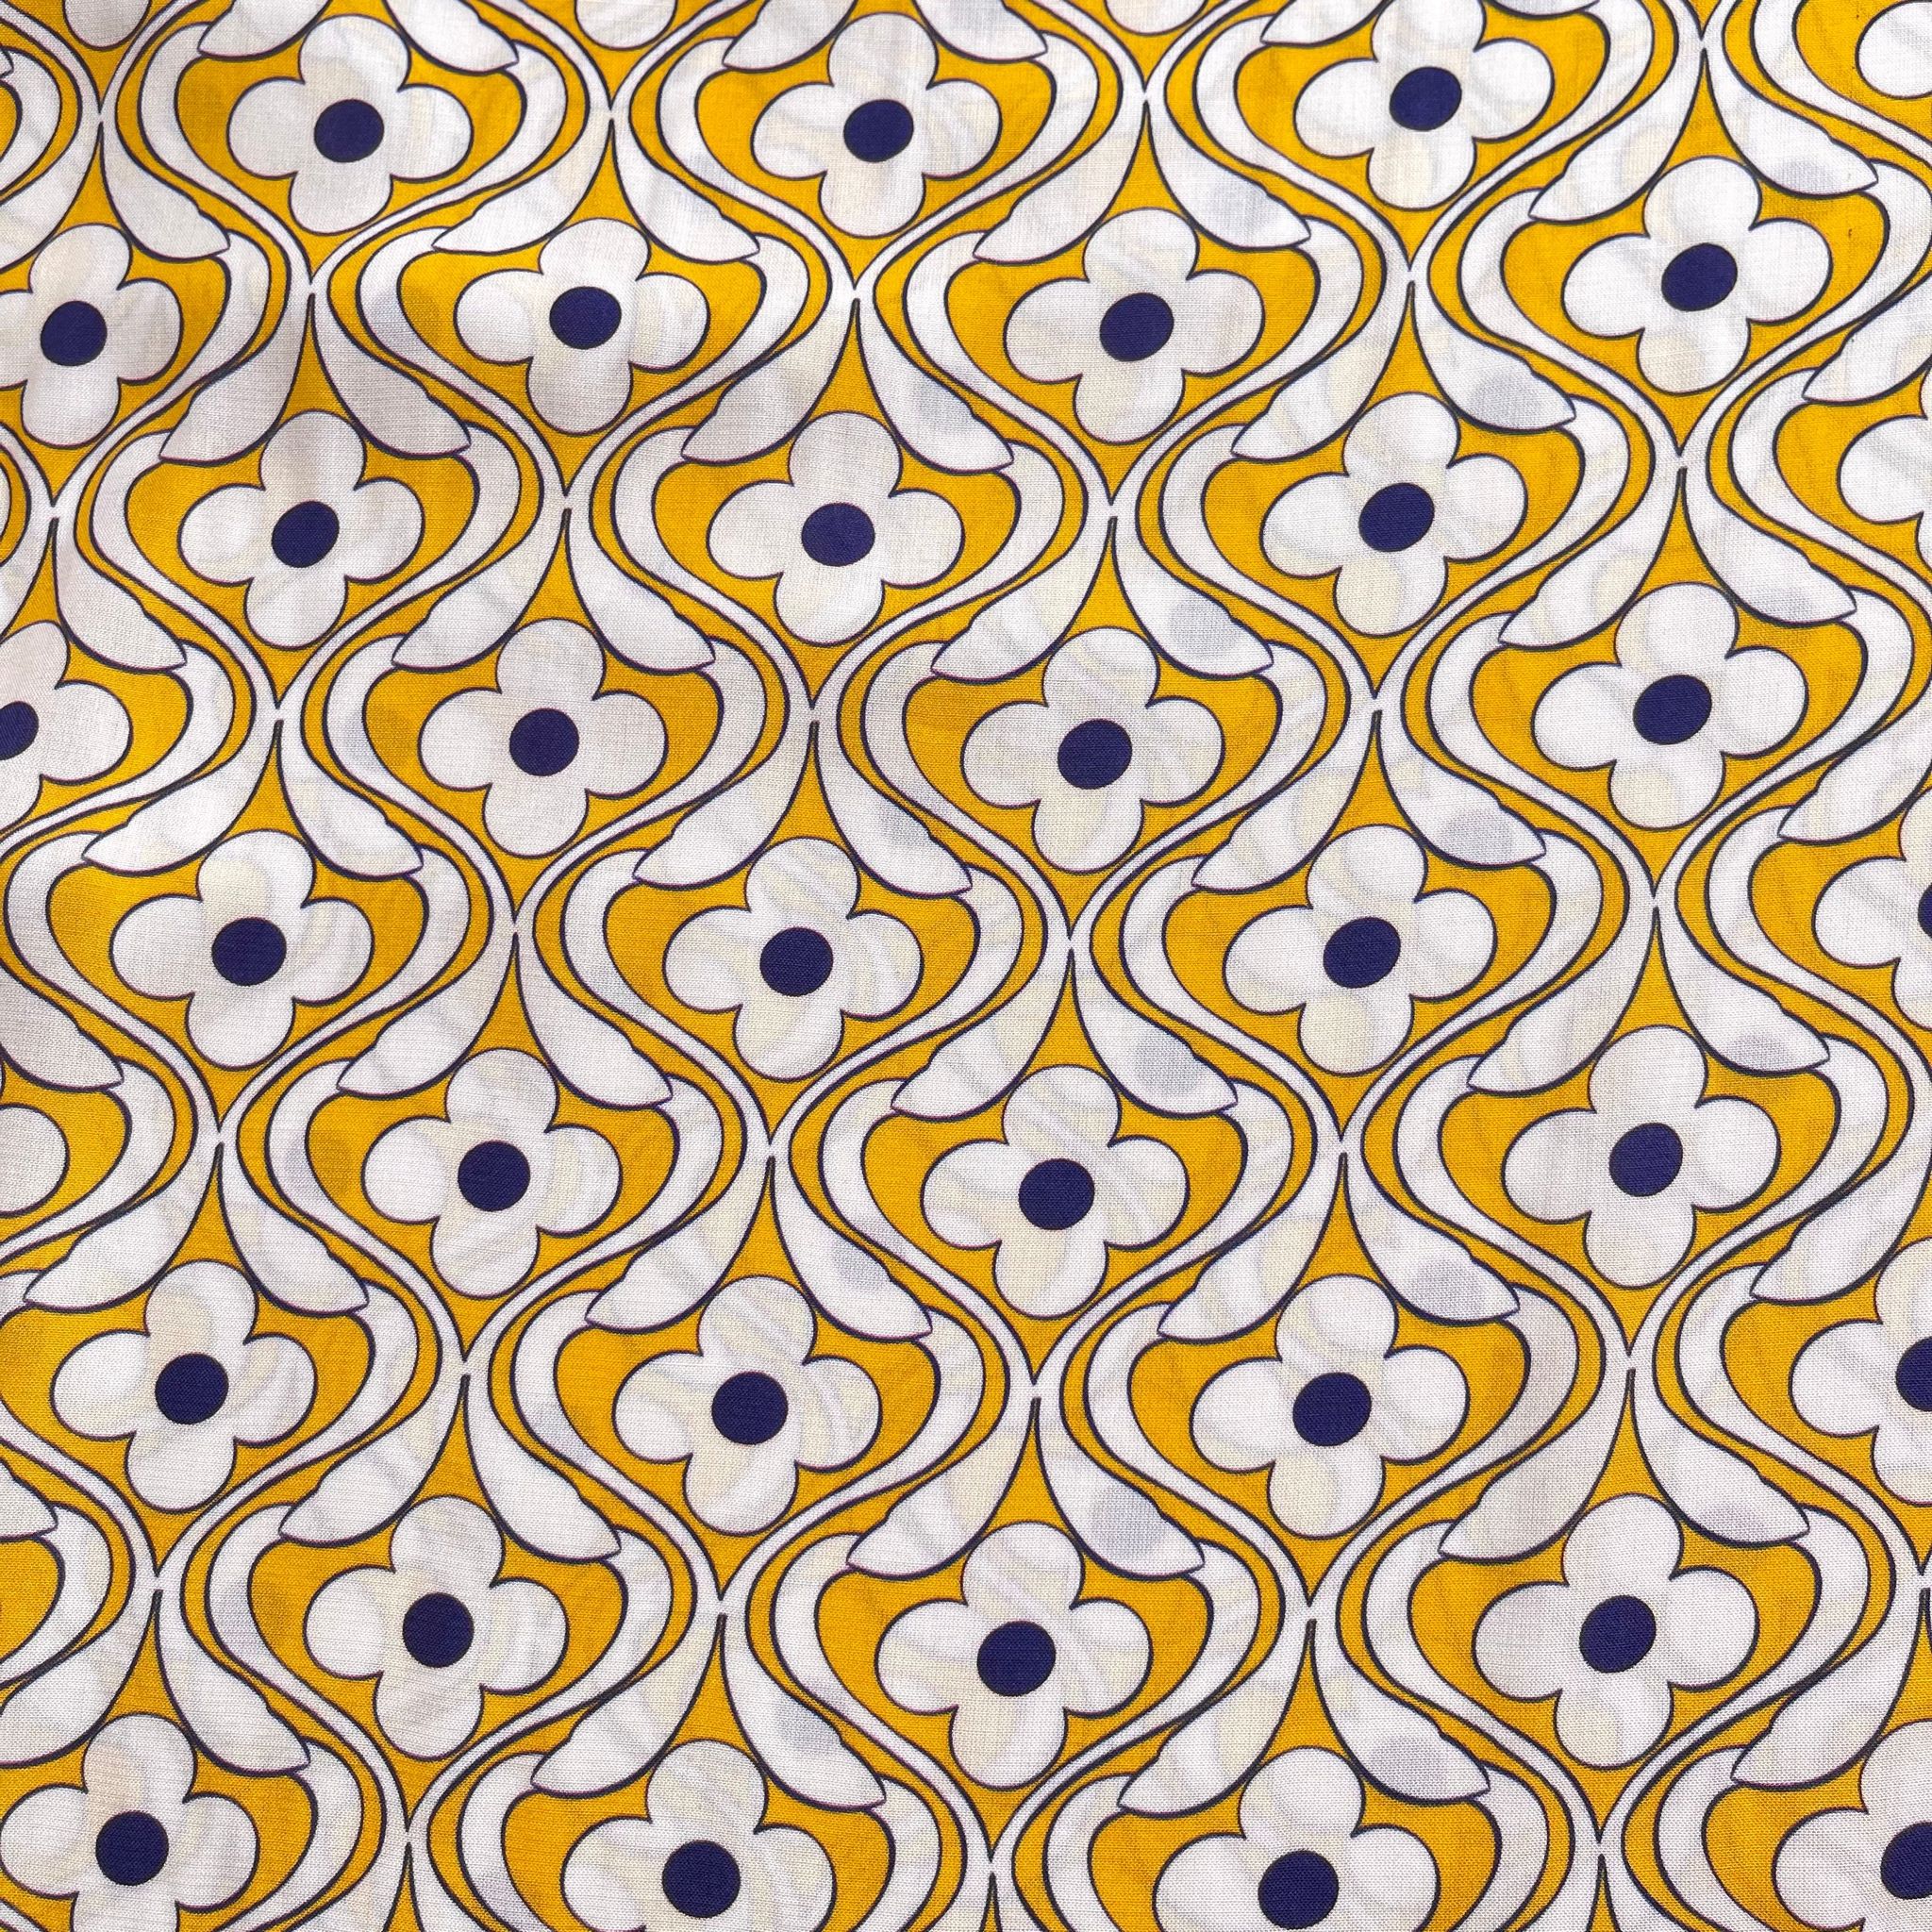 Groovy Flowers on Yellow Viscose Fabric